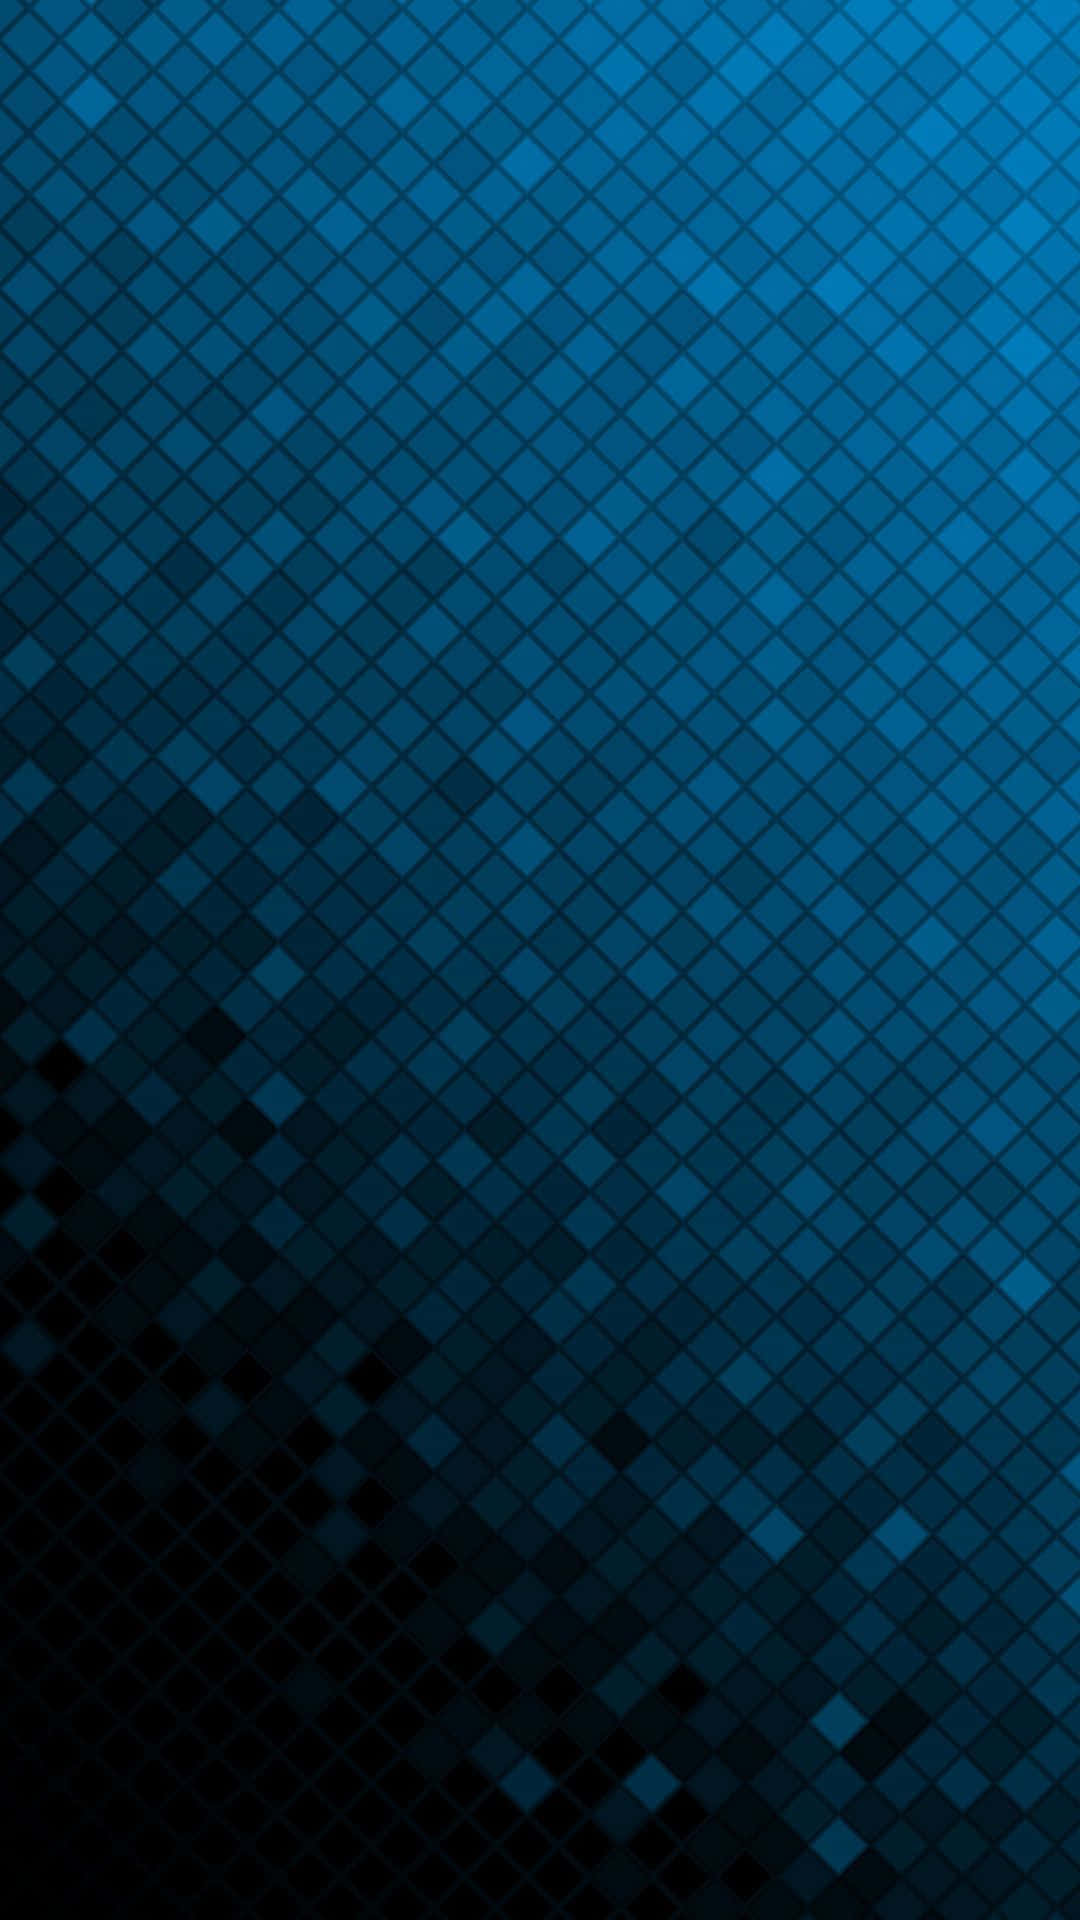 Galaxy S5 Blue Gradient Tiles Wallpaper